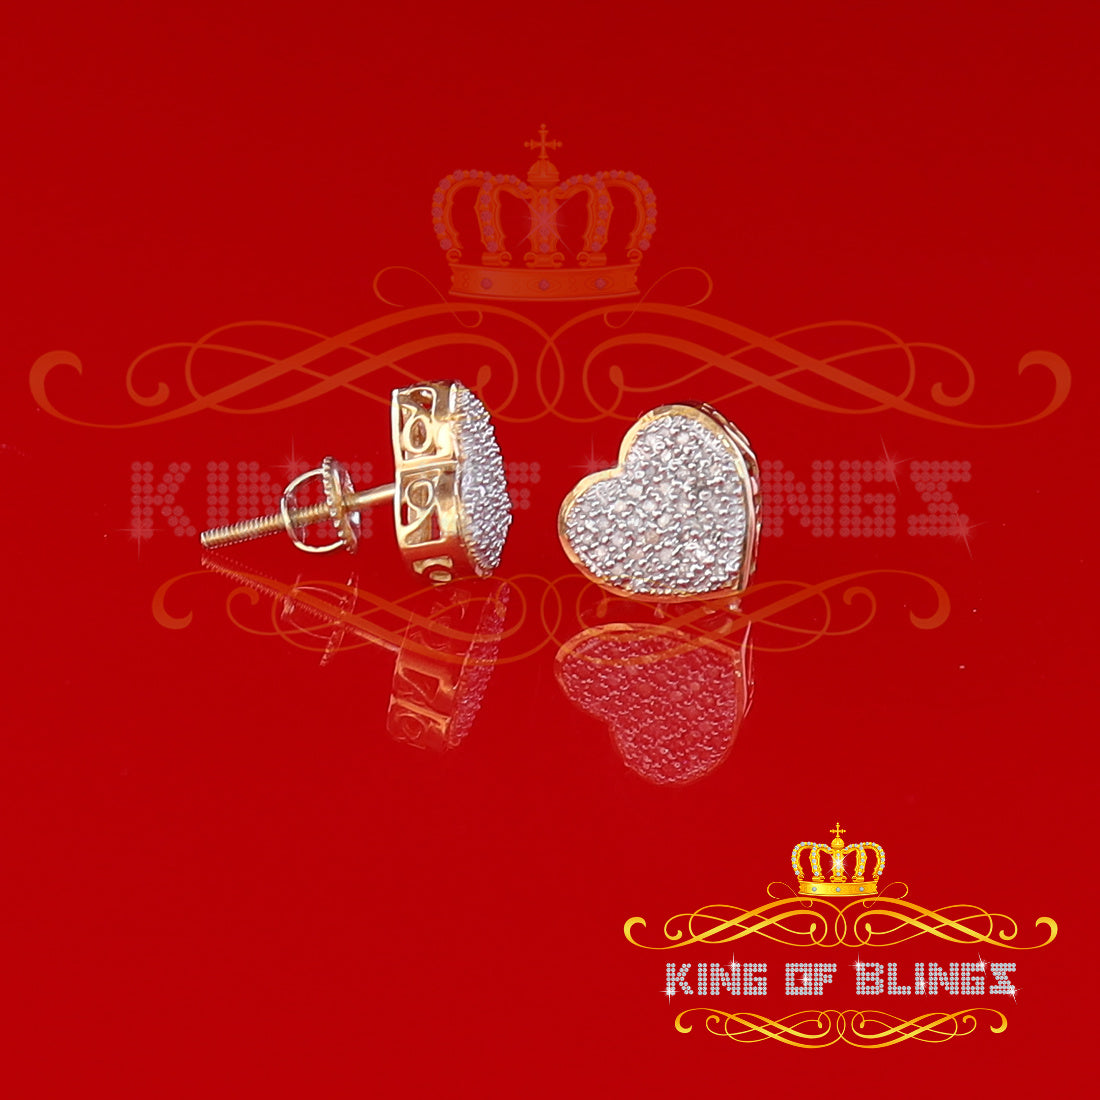 King of Blings-Aretes Para Hombre Heart 925 Yellow Silver 0.15ct Diamond Women's /Men's Earring KING OF BLINGS